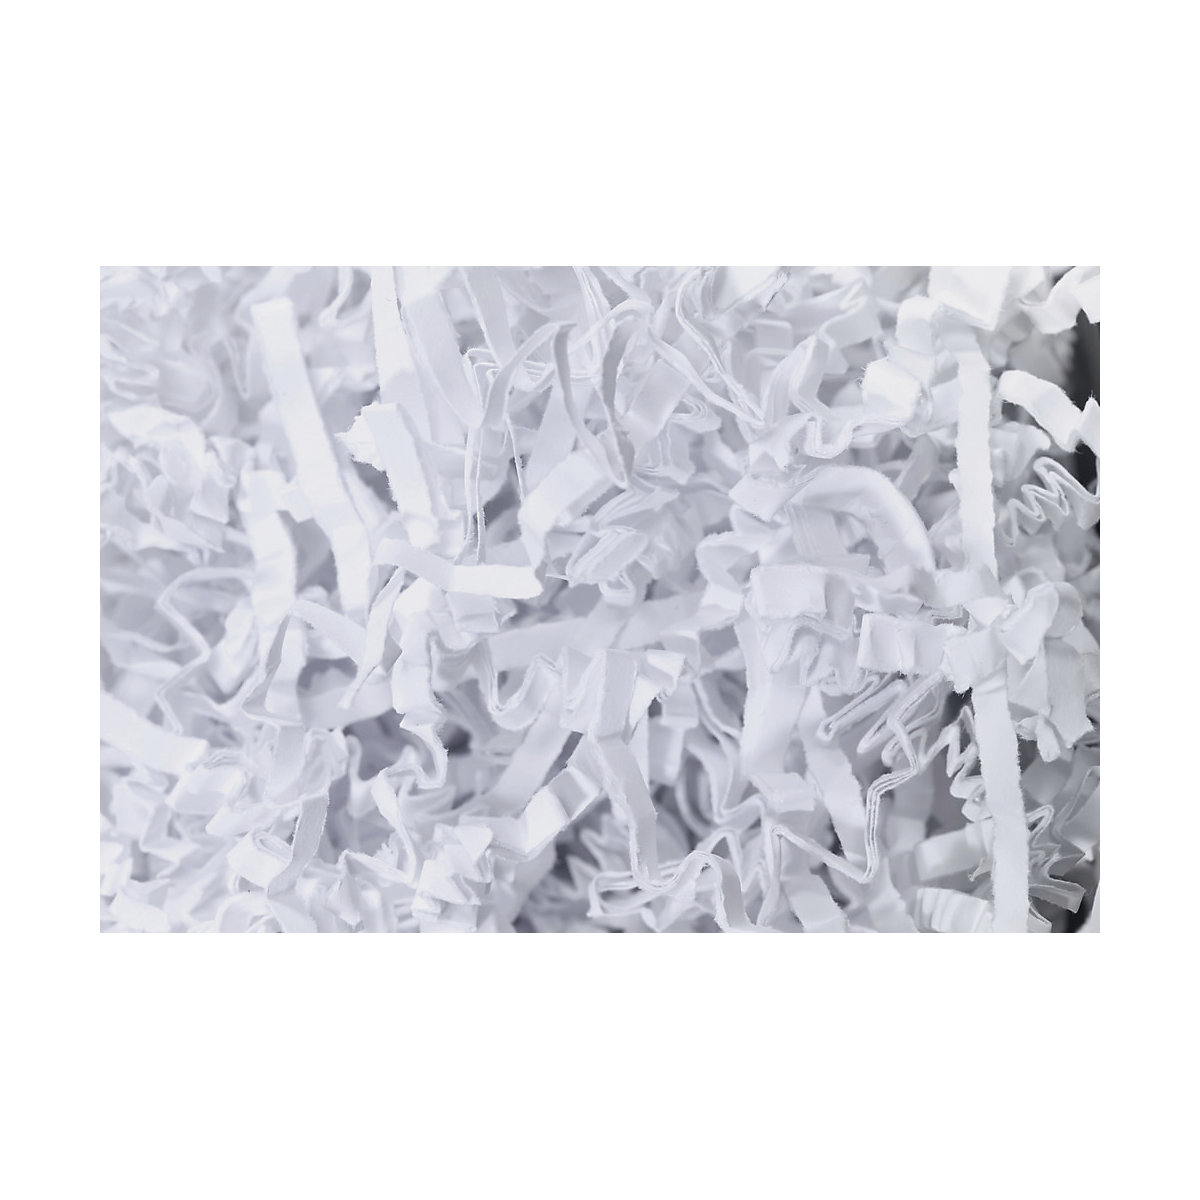 Materiale di riempimento in carta SizzlePak, 10 kg, capacità 350 l, bianco, a partire da 5 pz.